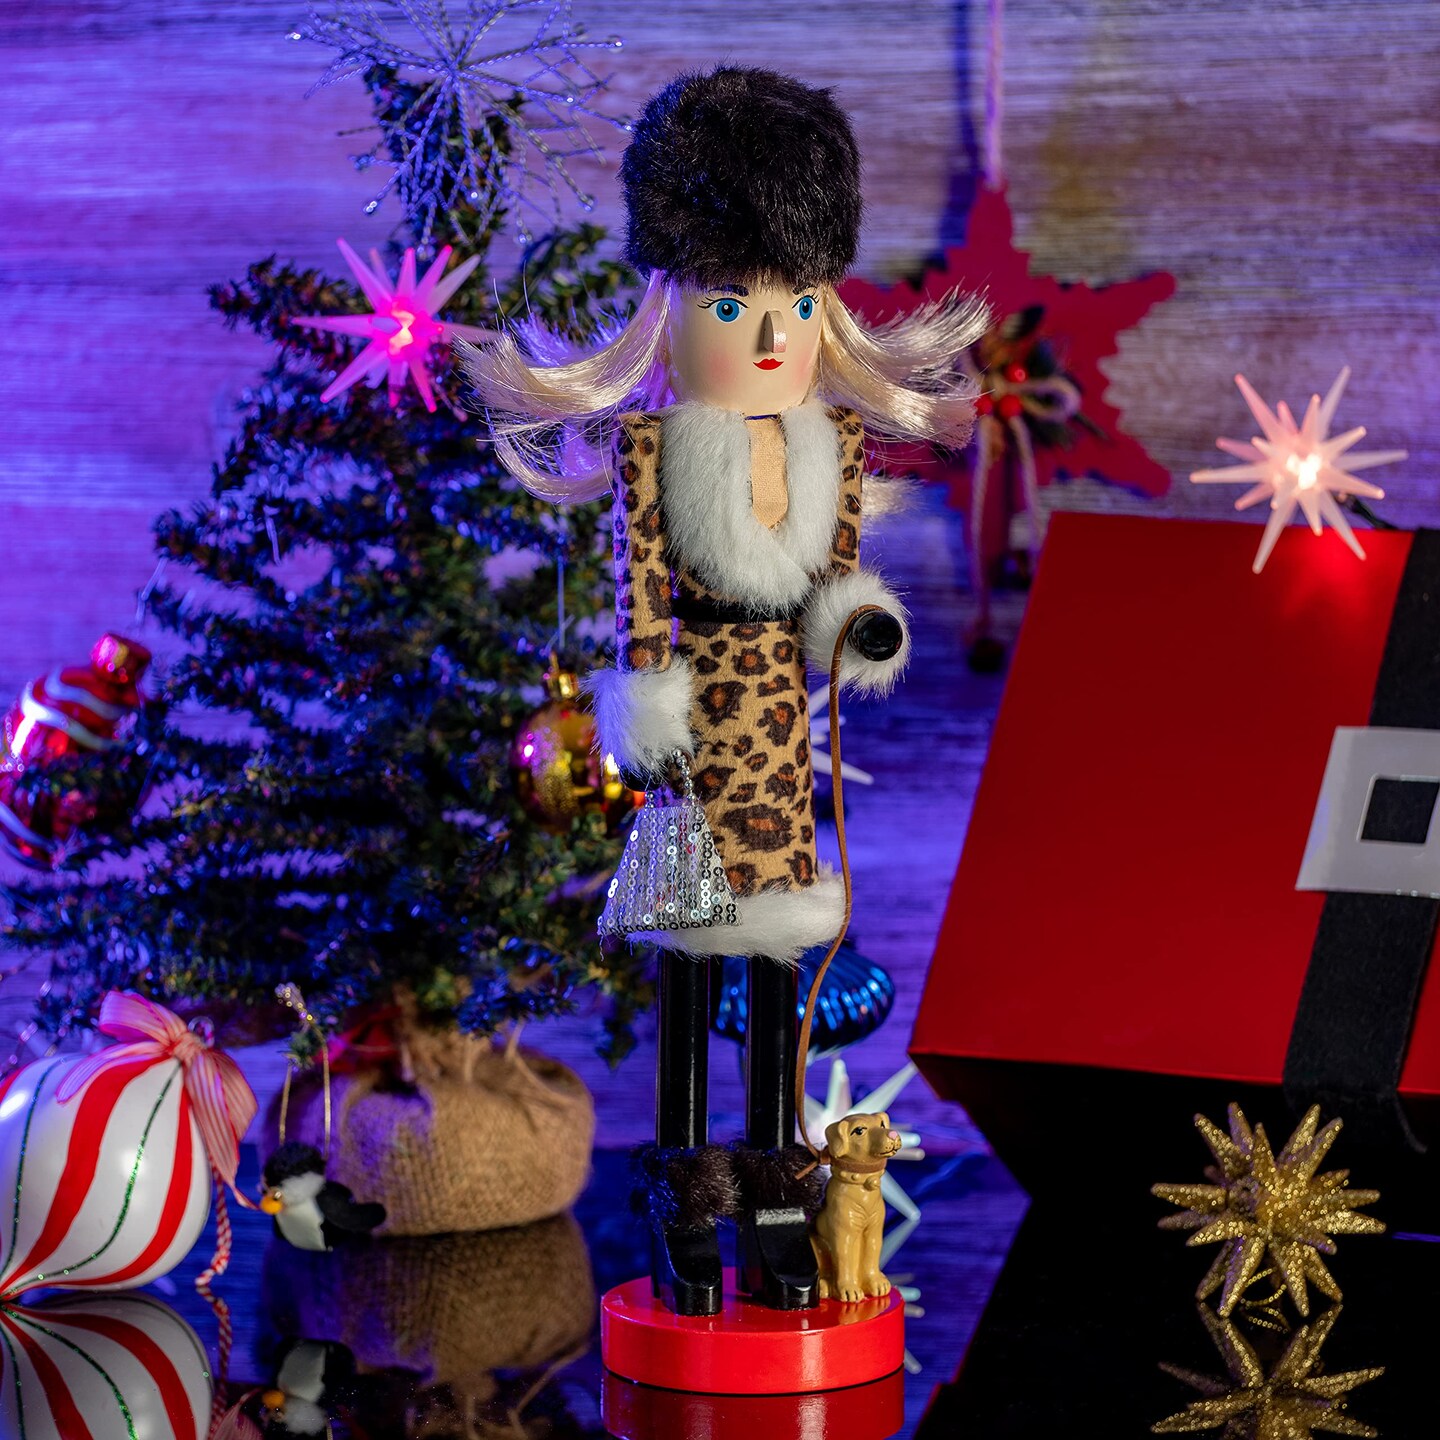 Ornativity Shopping Lady Christmas Nutcracker - Wooden Glitter Shopper with Dog Themed Holiday Nut Cracker Doll Figure Toy Decorations